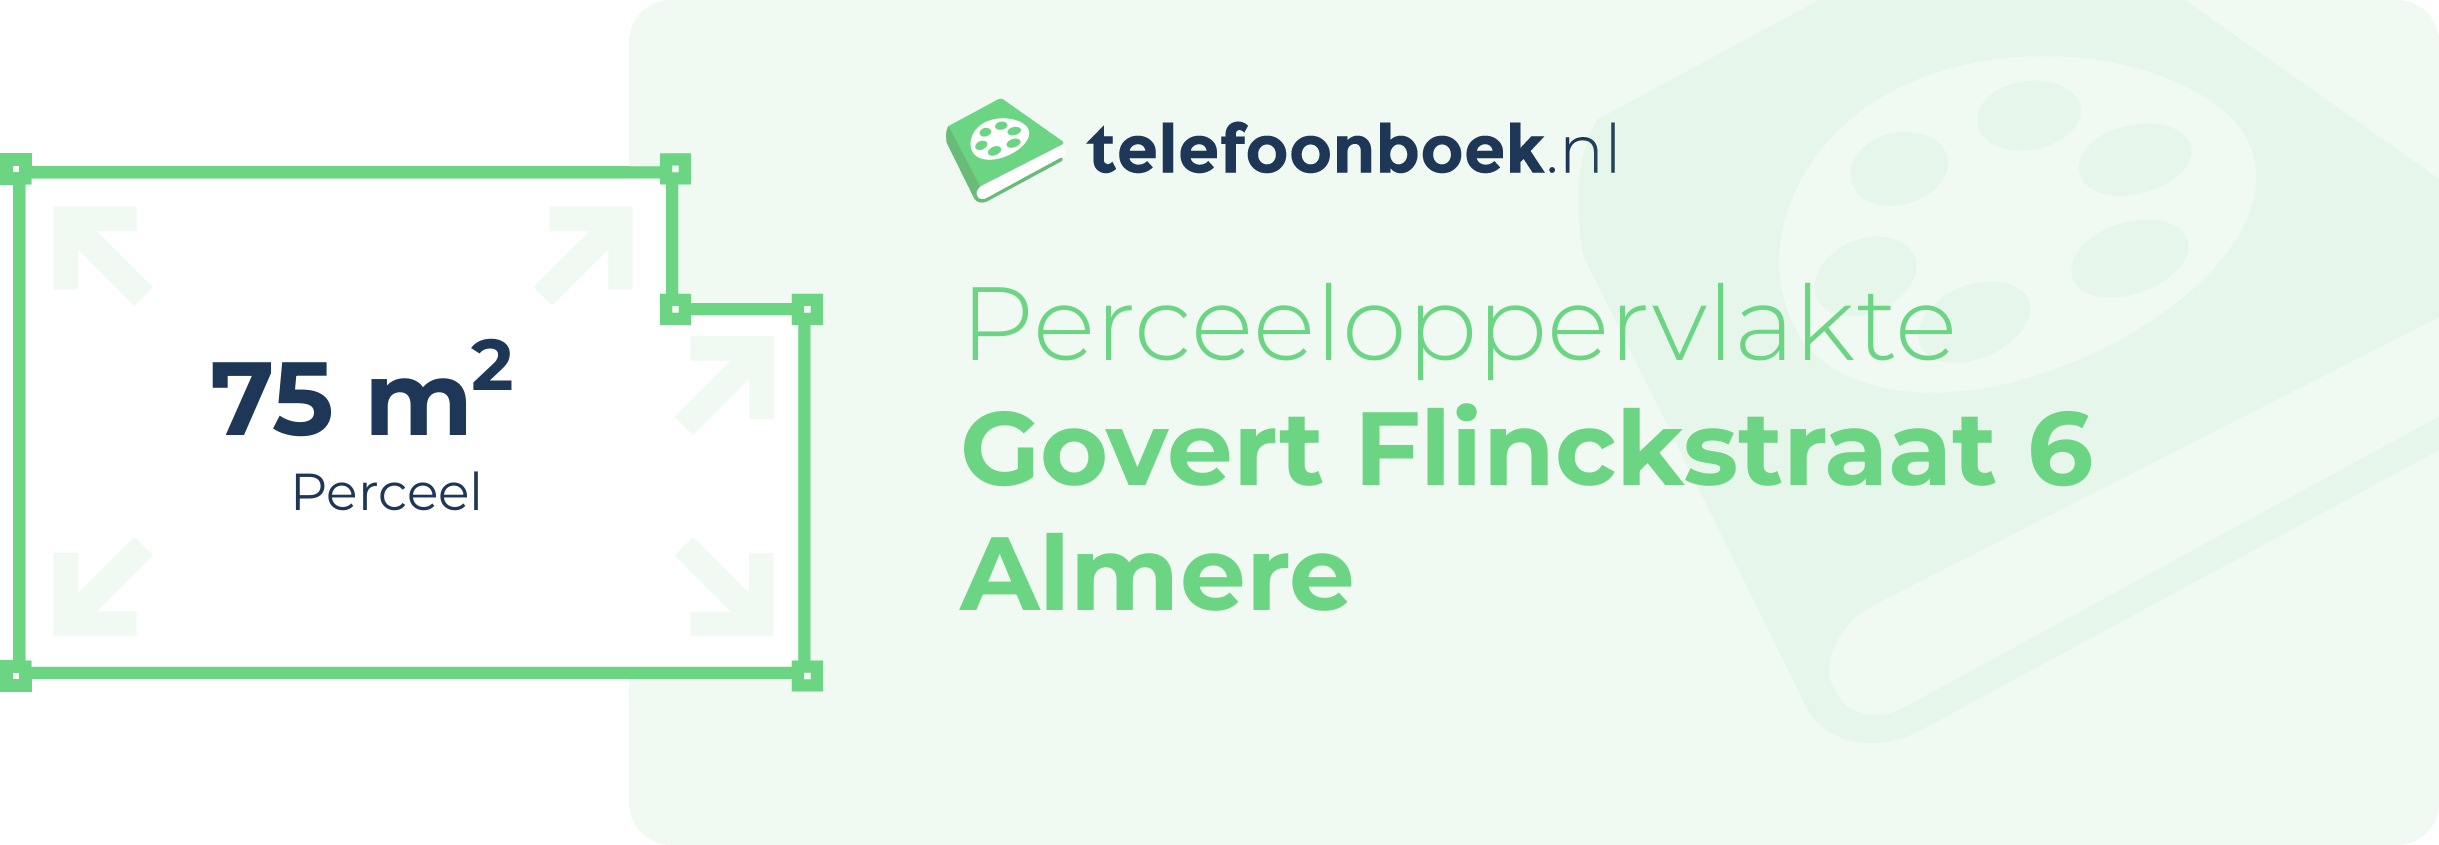 Perceeloppervlakte Govert Flinckstraat 6 Almere